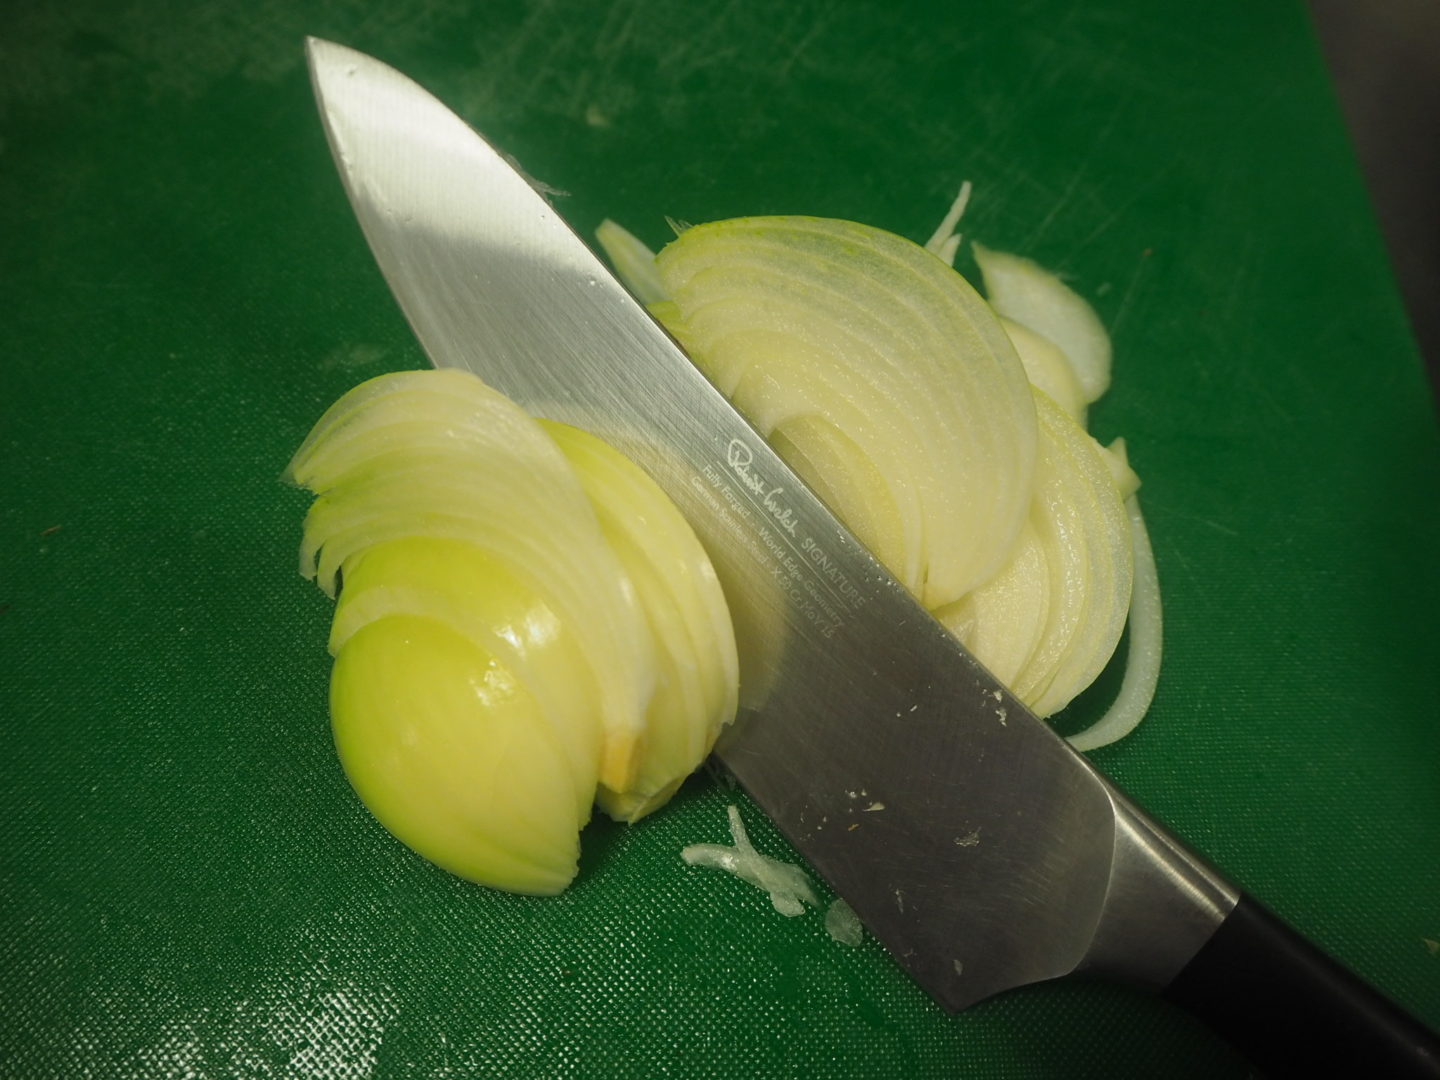 Slicing up onions